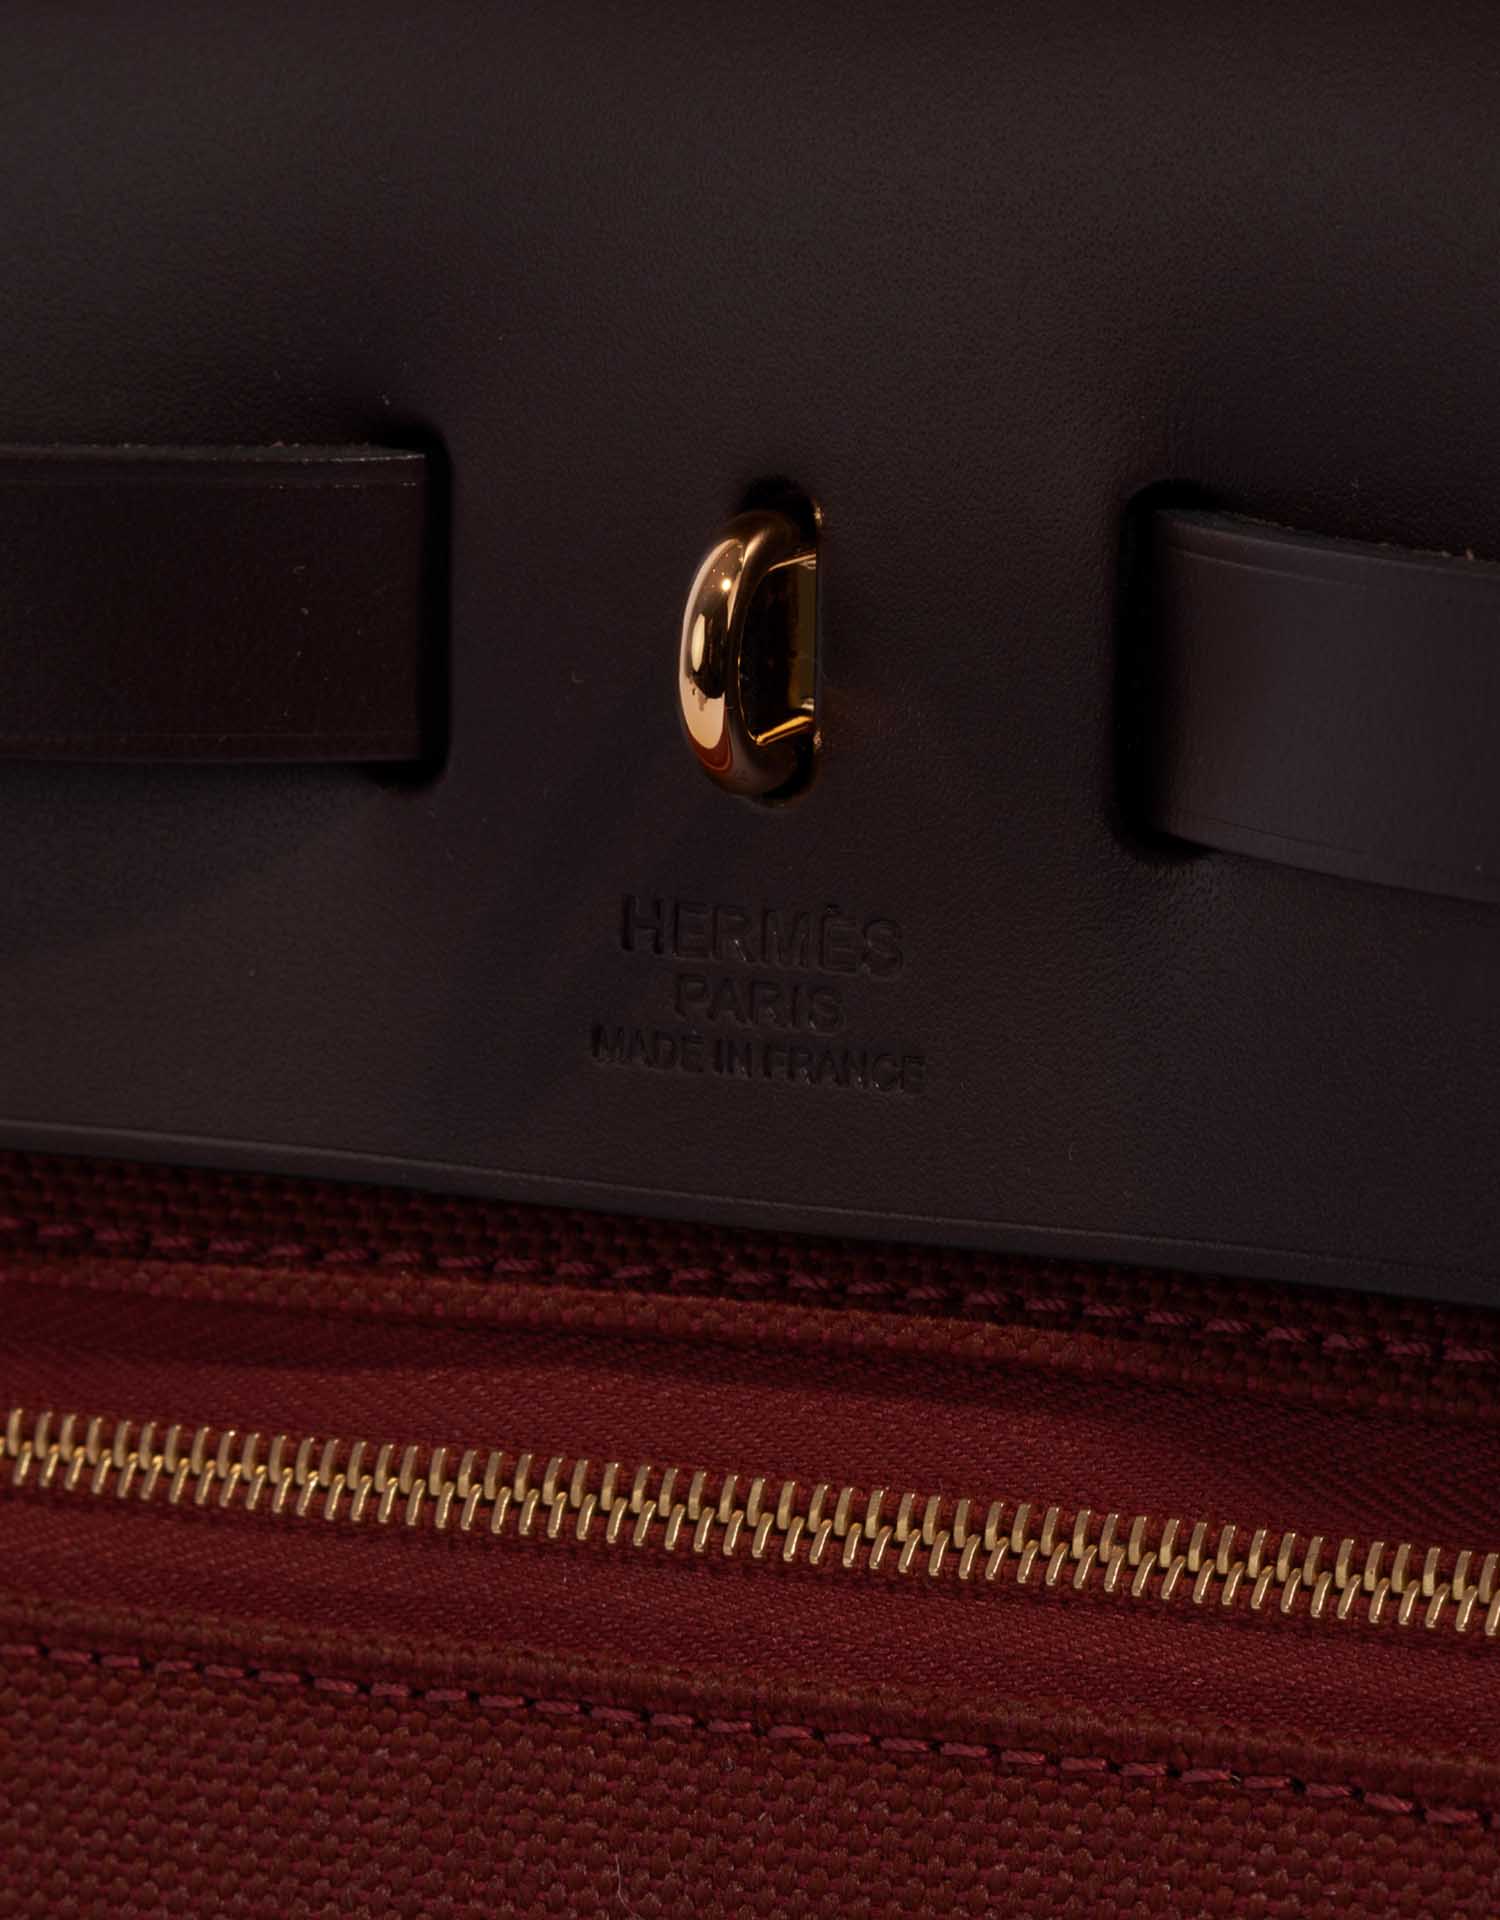 Hermès - Herbag 31 Ebene/Rouge H